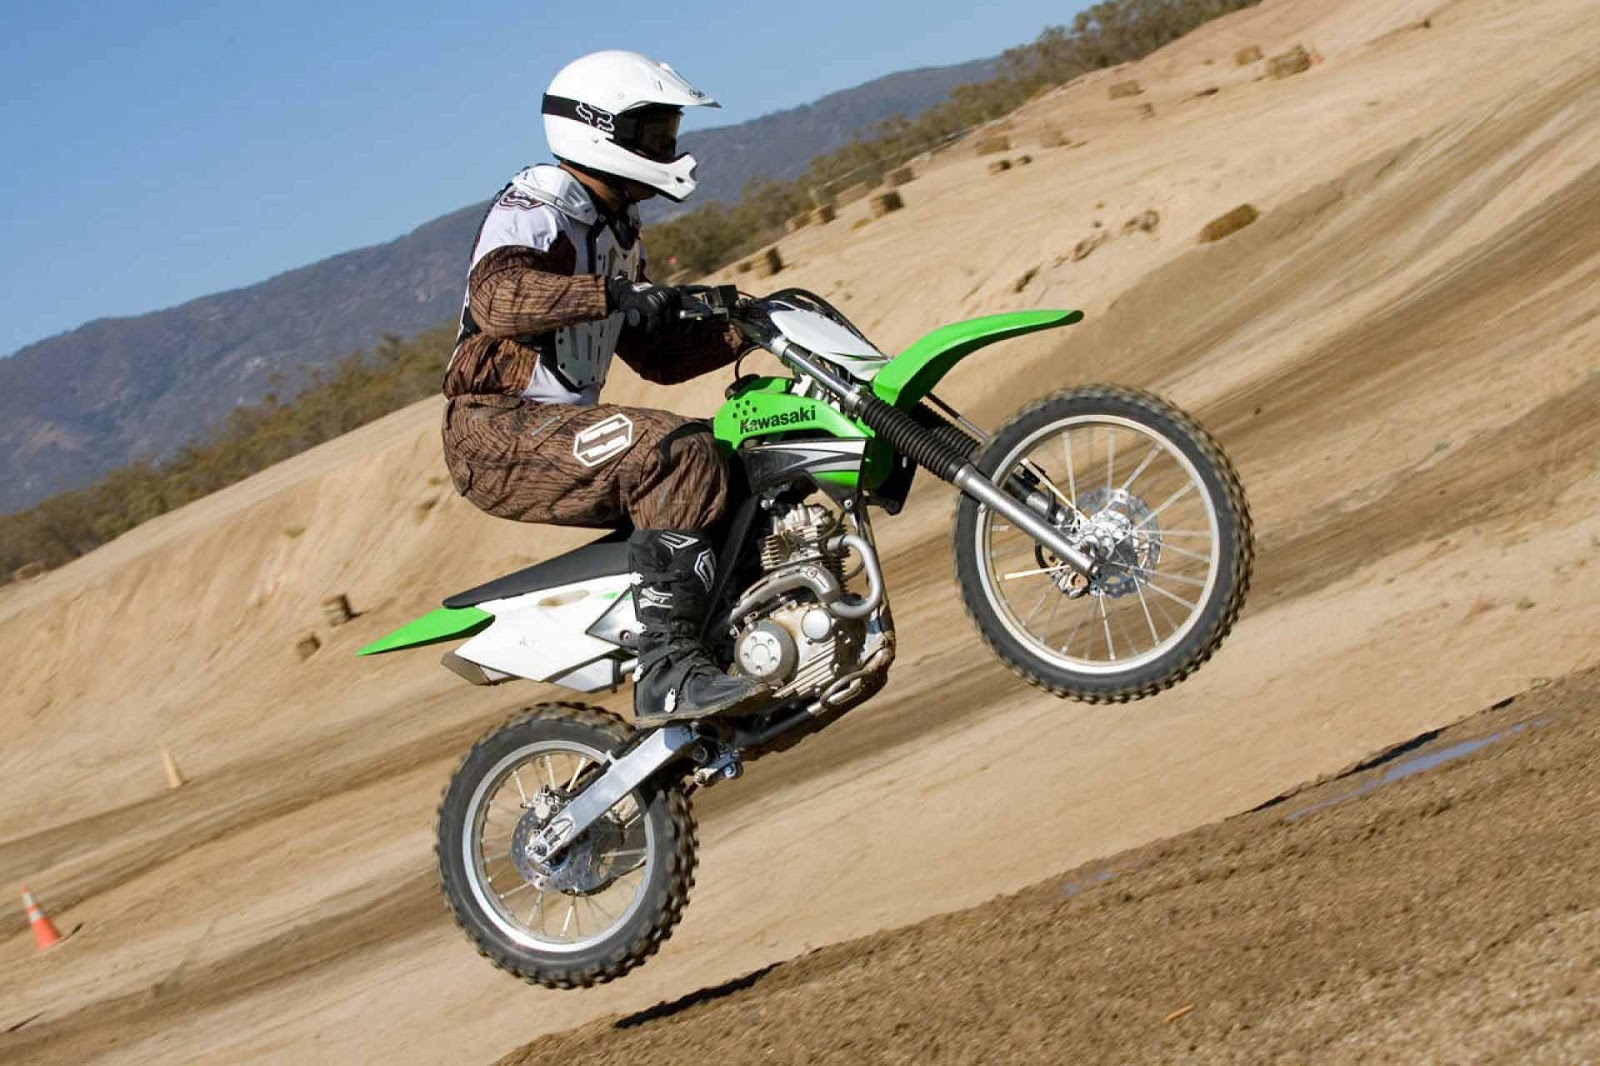 Kawasaki Dirt Bike Images Download - Motorcycle - HD Wallpaper 